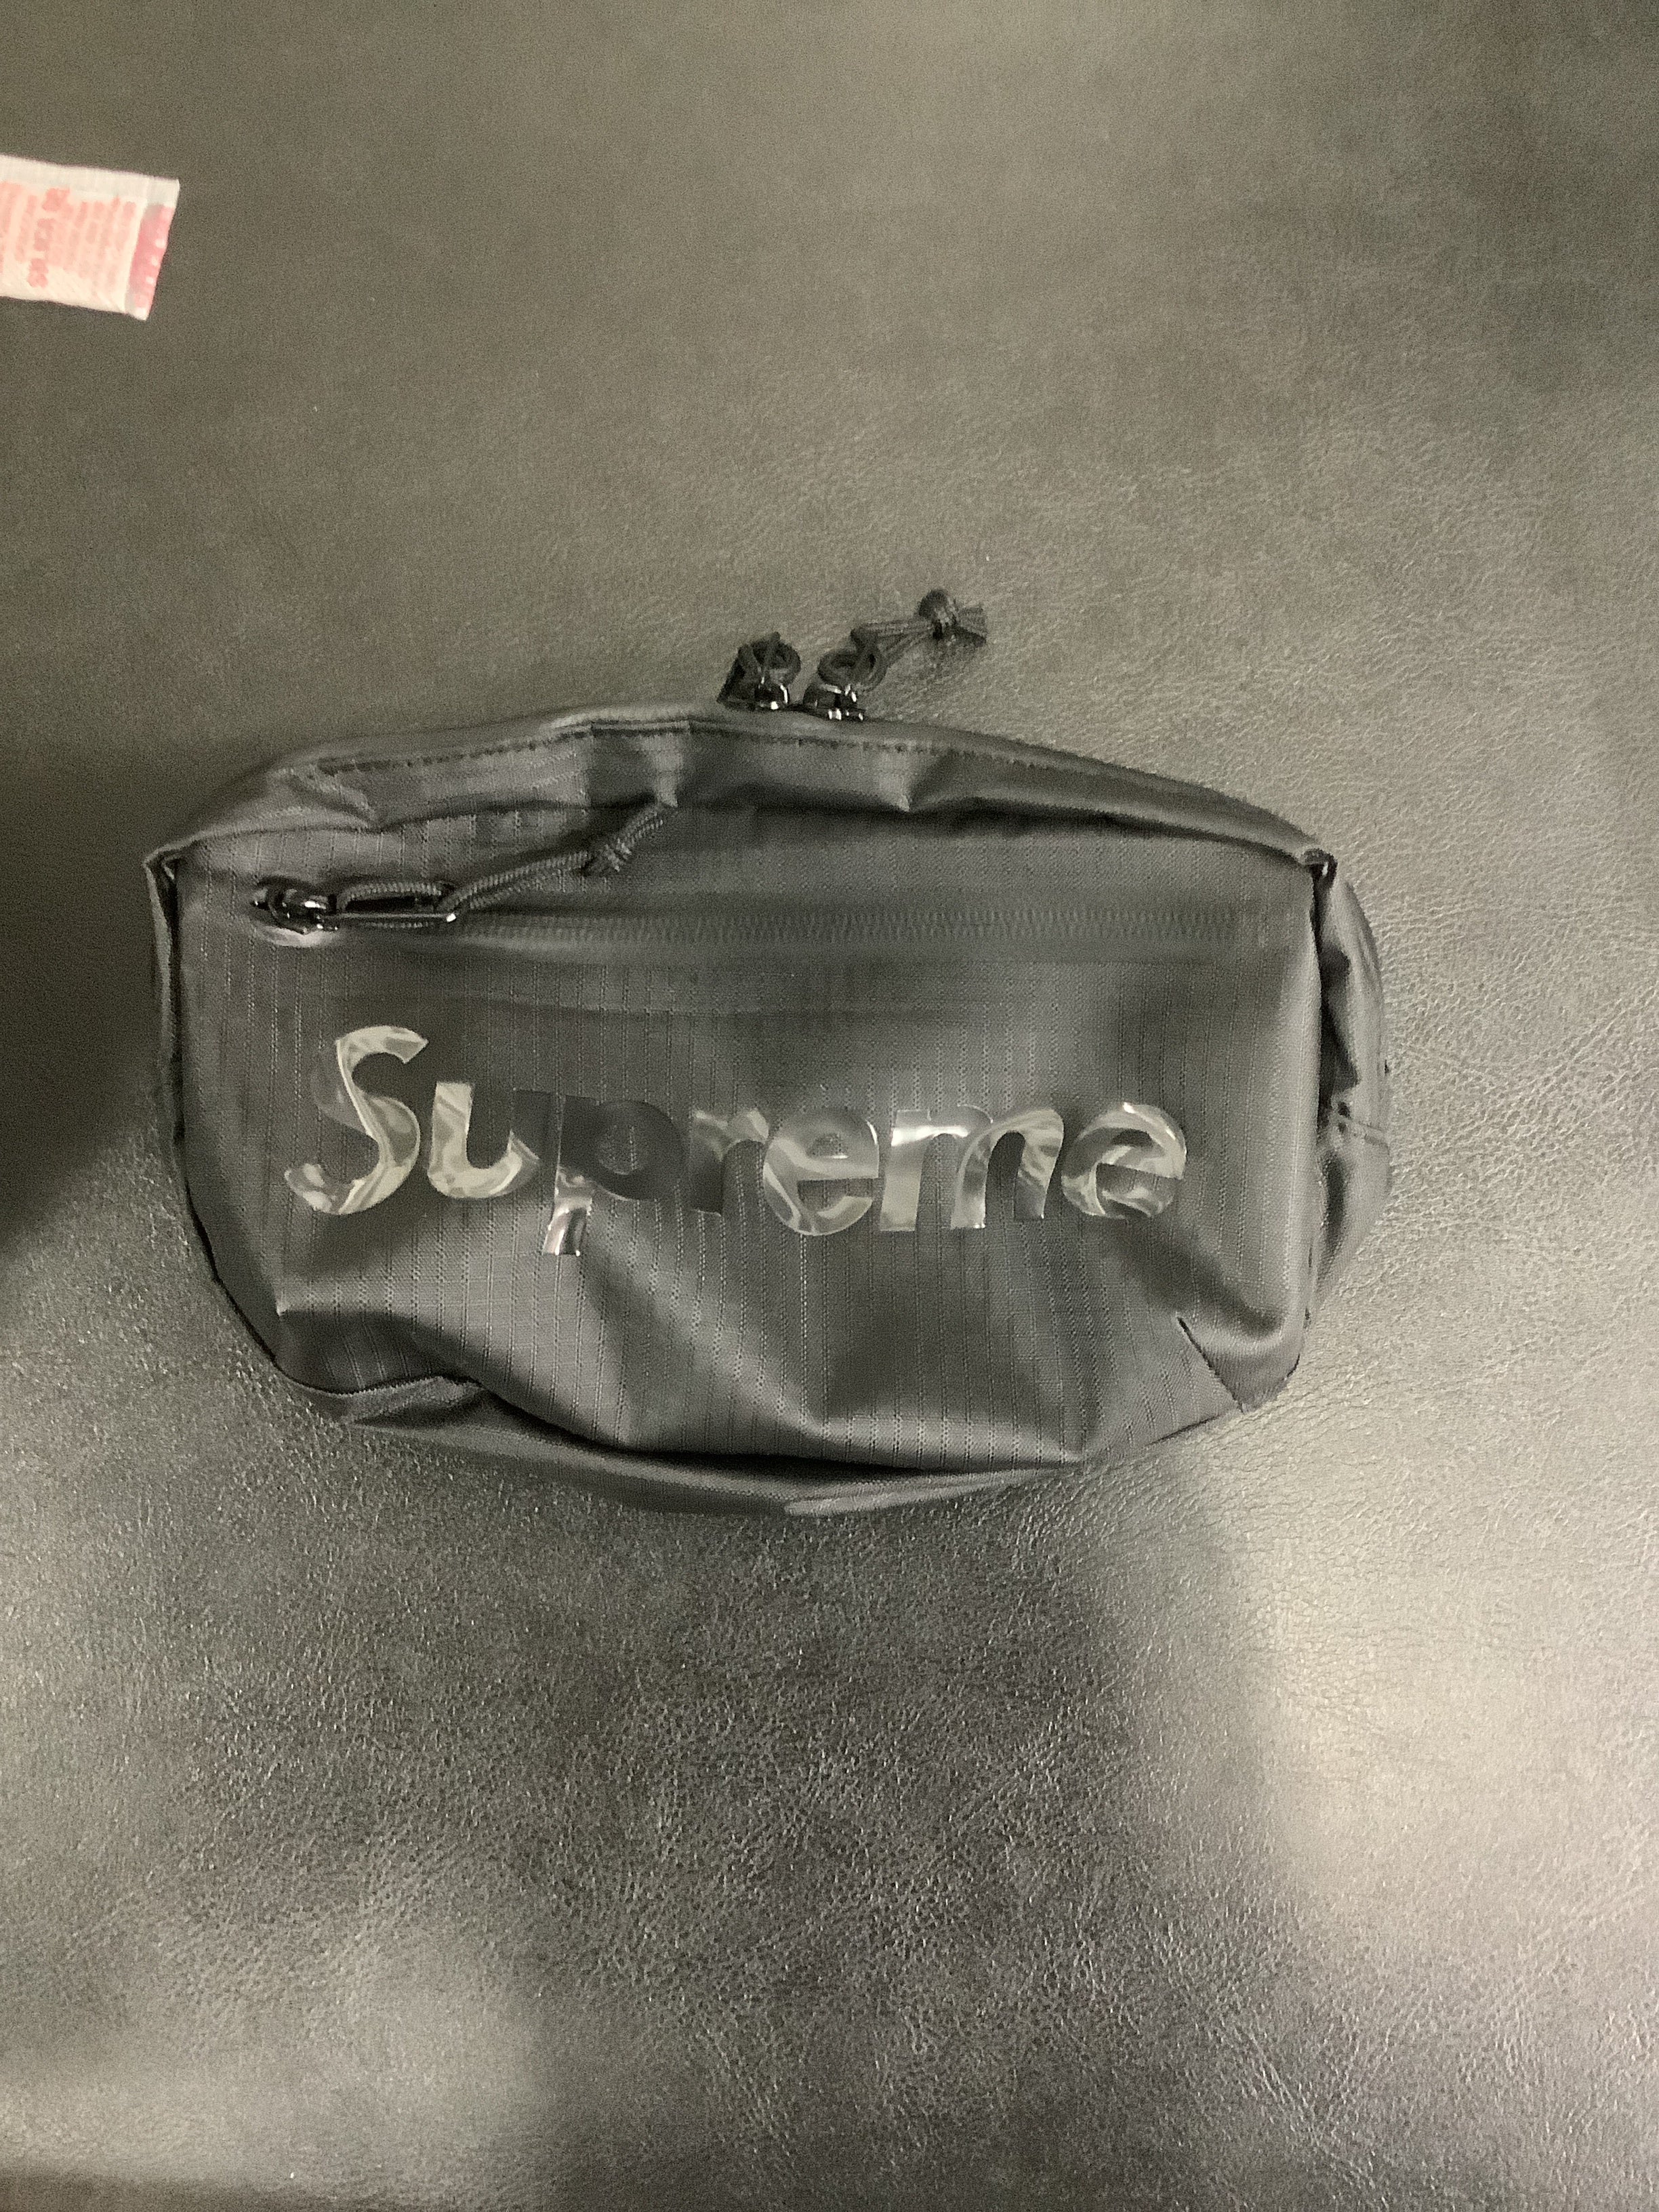 Supreme Waist Bag Black